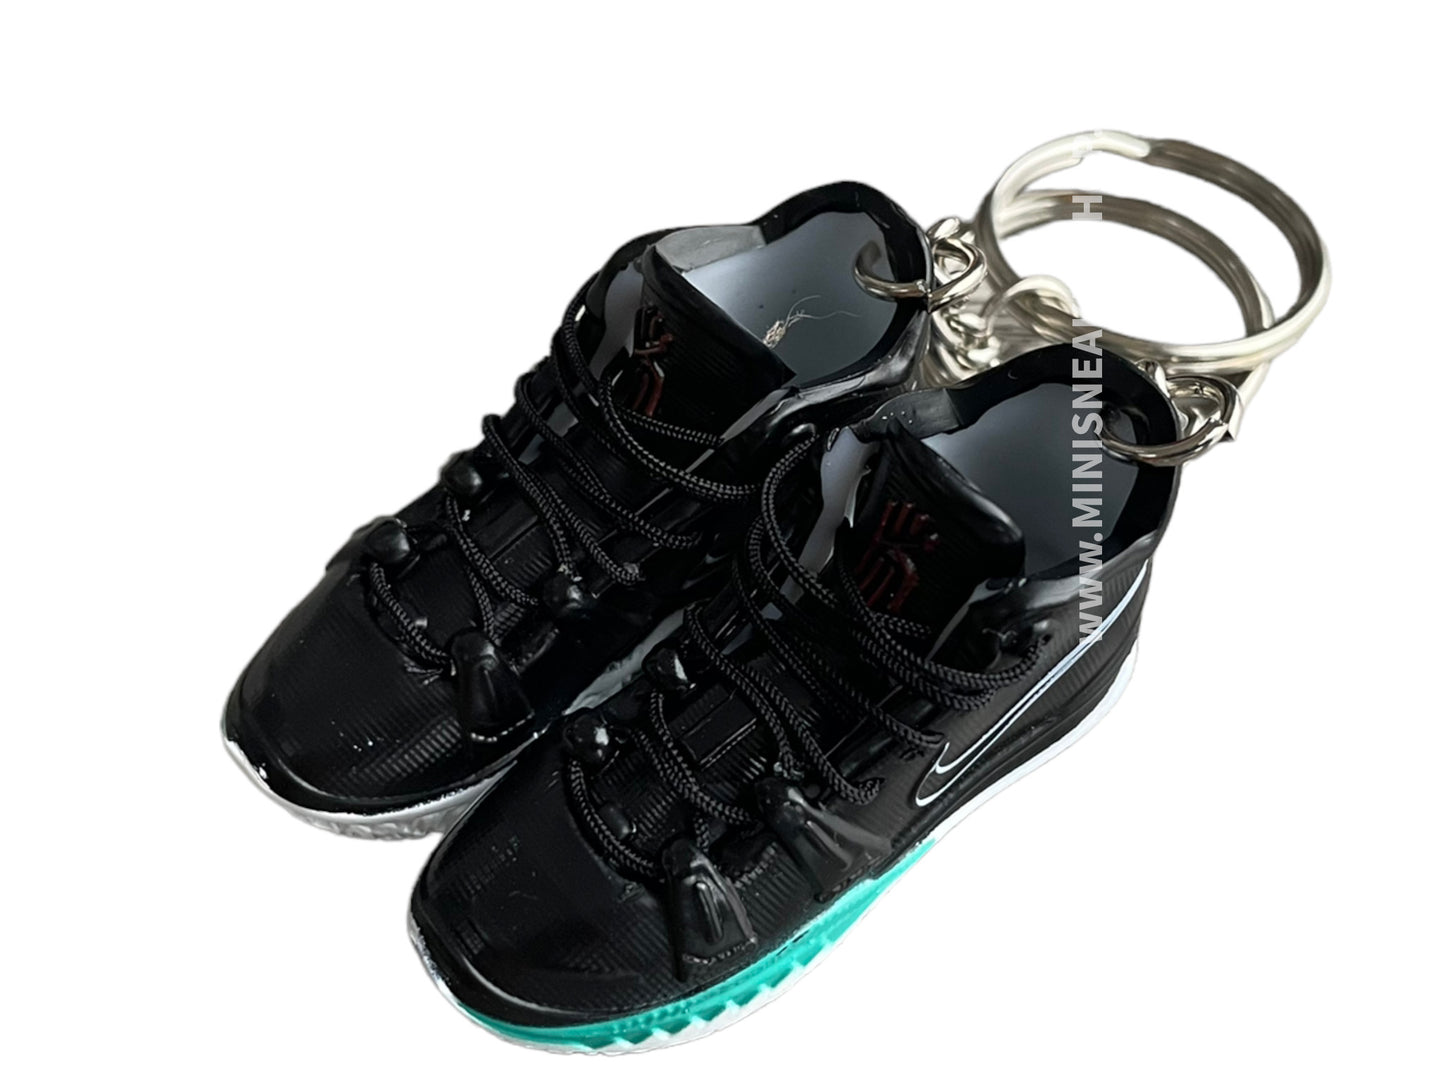 Mini sneaker keychain 3D Nike Kyrie Black White Aqua